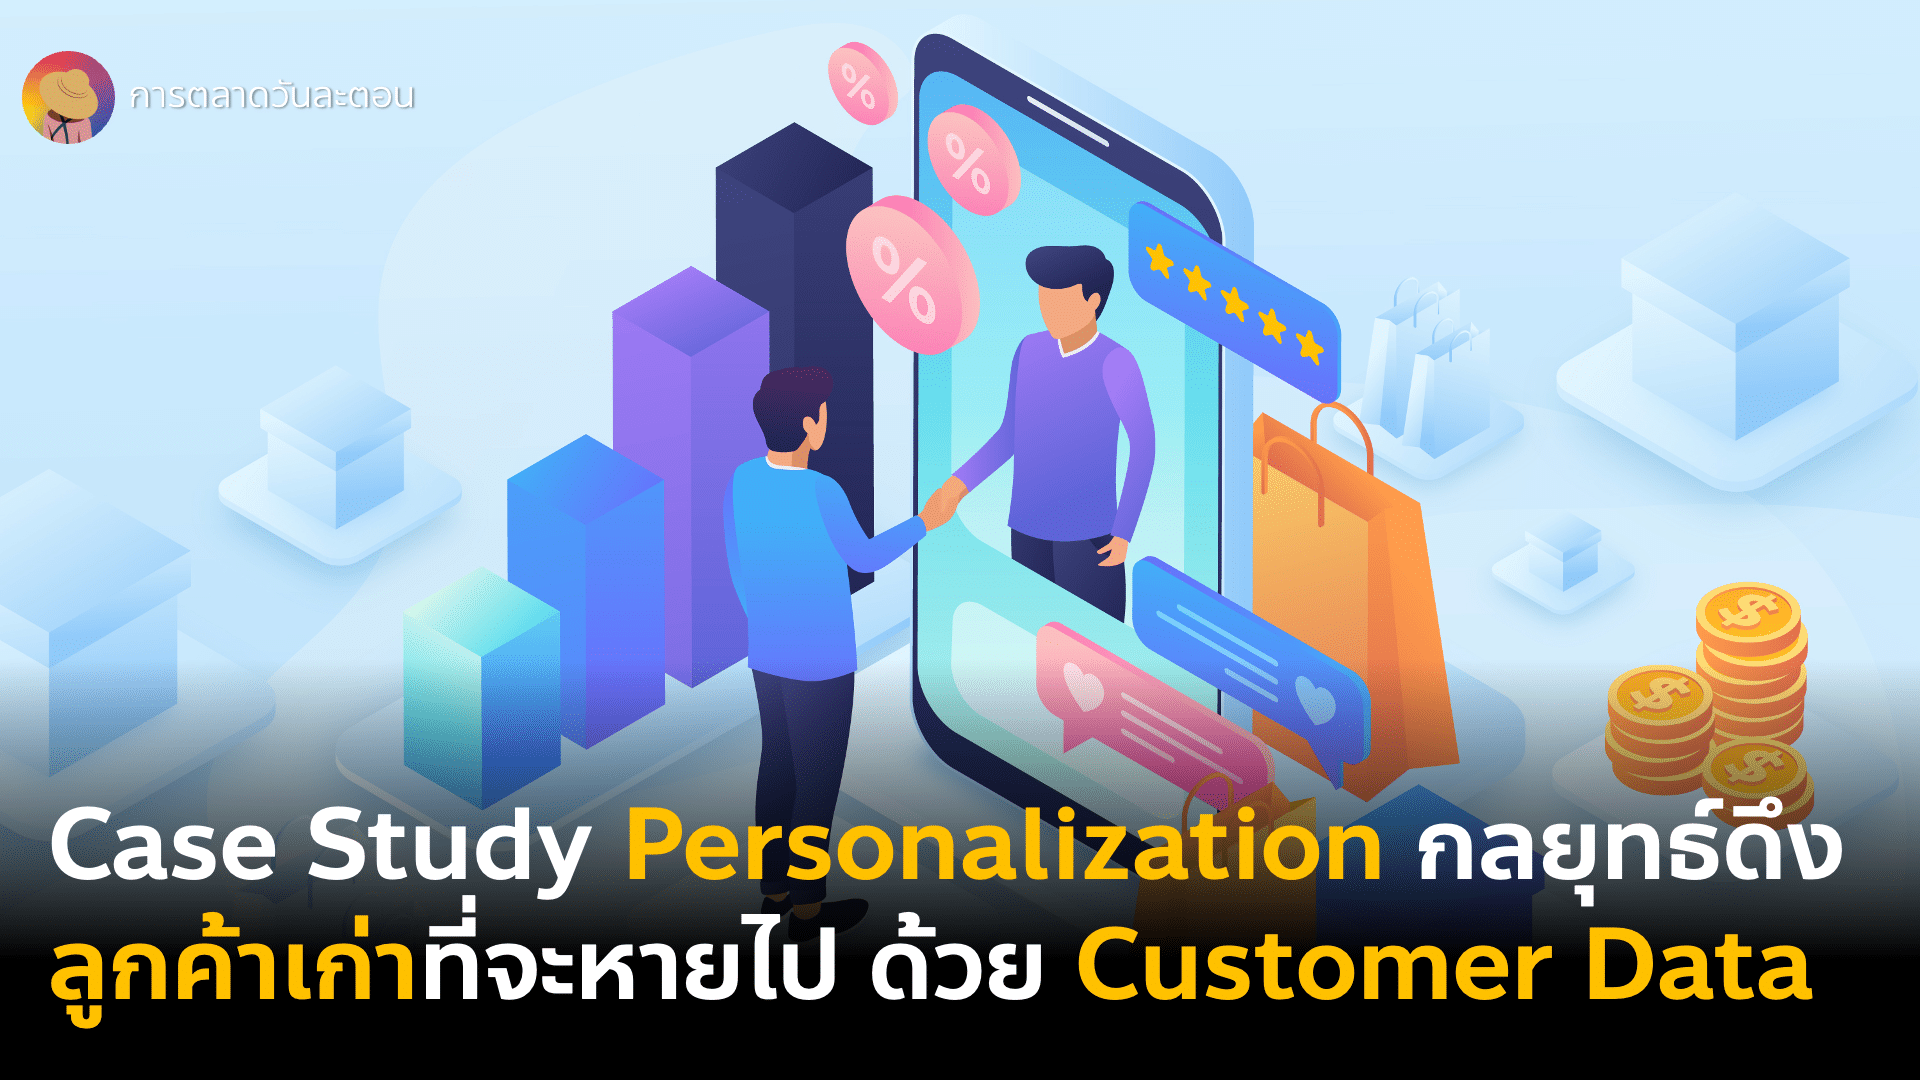 Case Study Personalization Part 3 ดึงลูกค้าเก่ากลับมาด้วย Customer Data